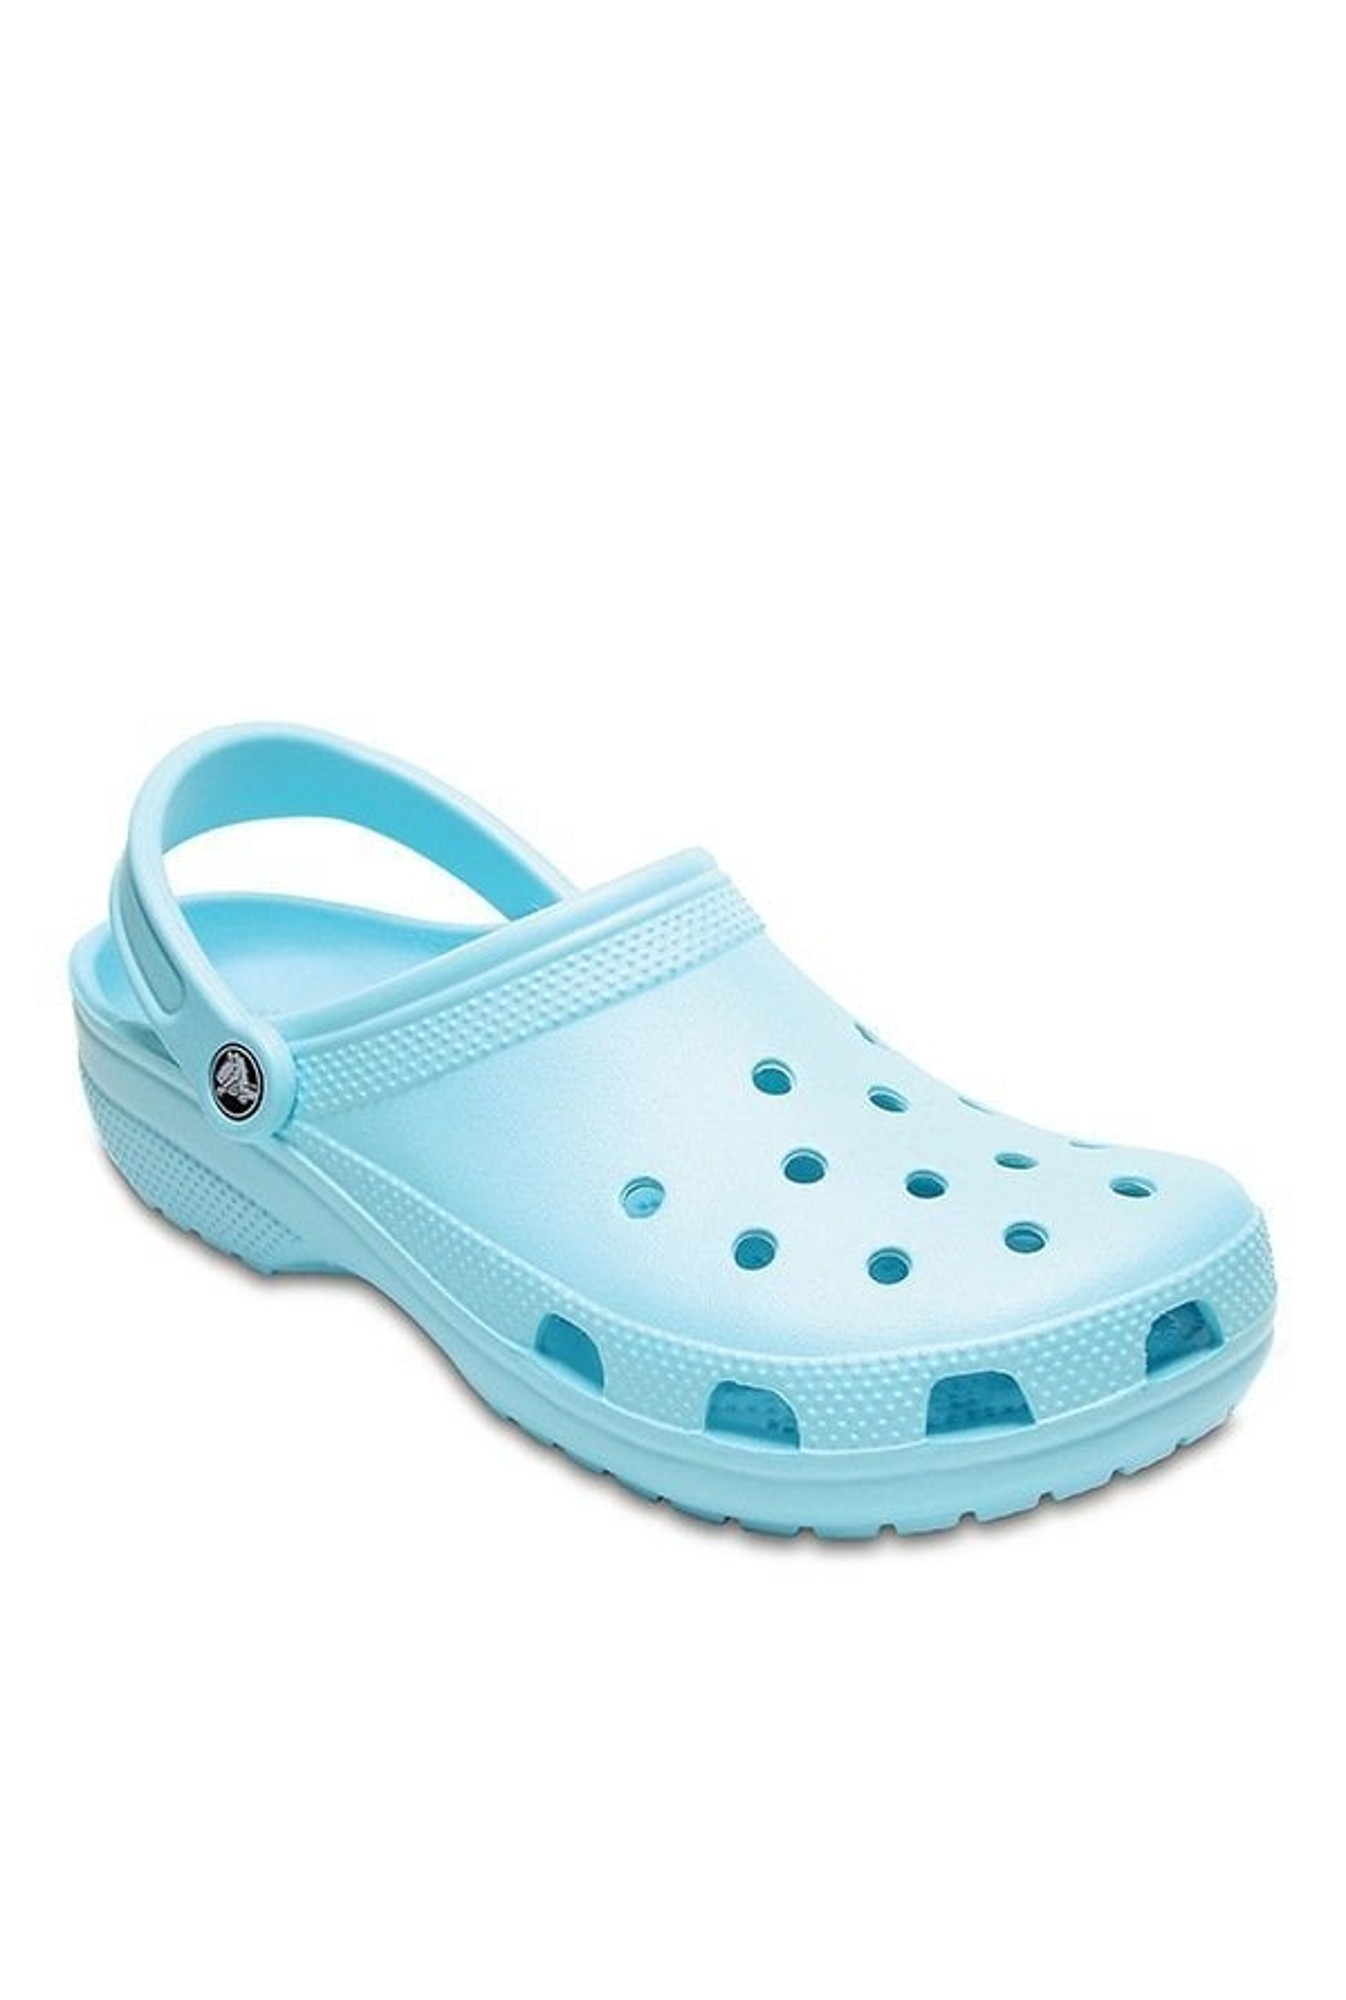 crocs blue ice